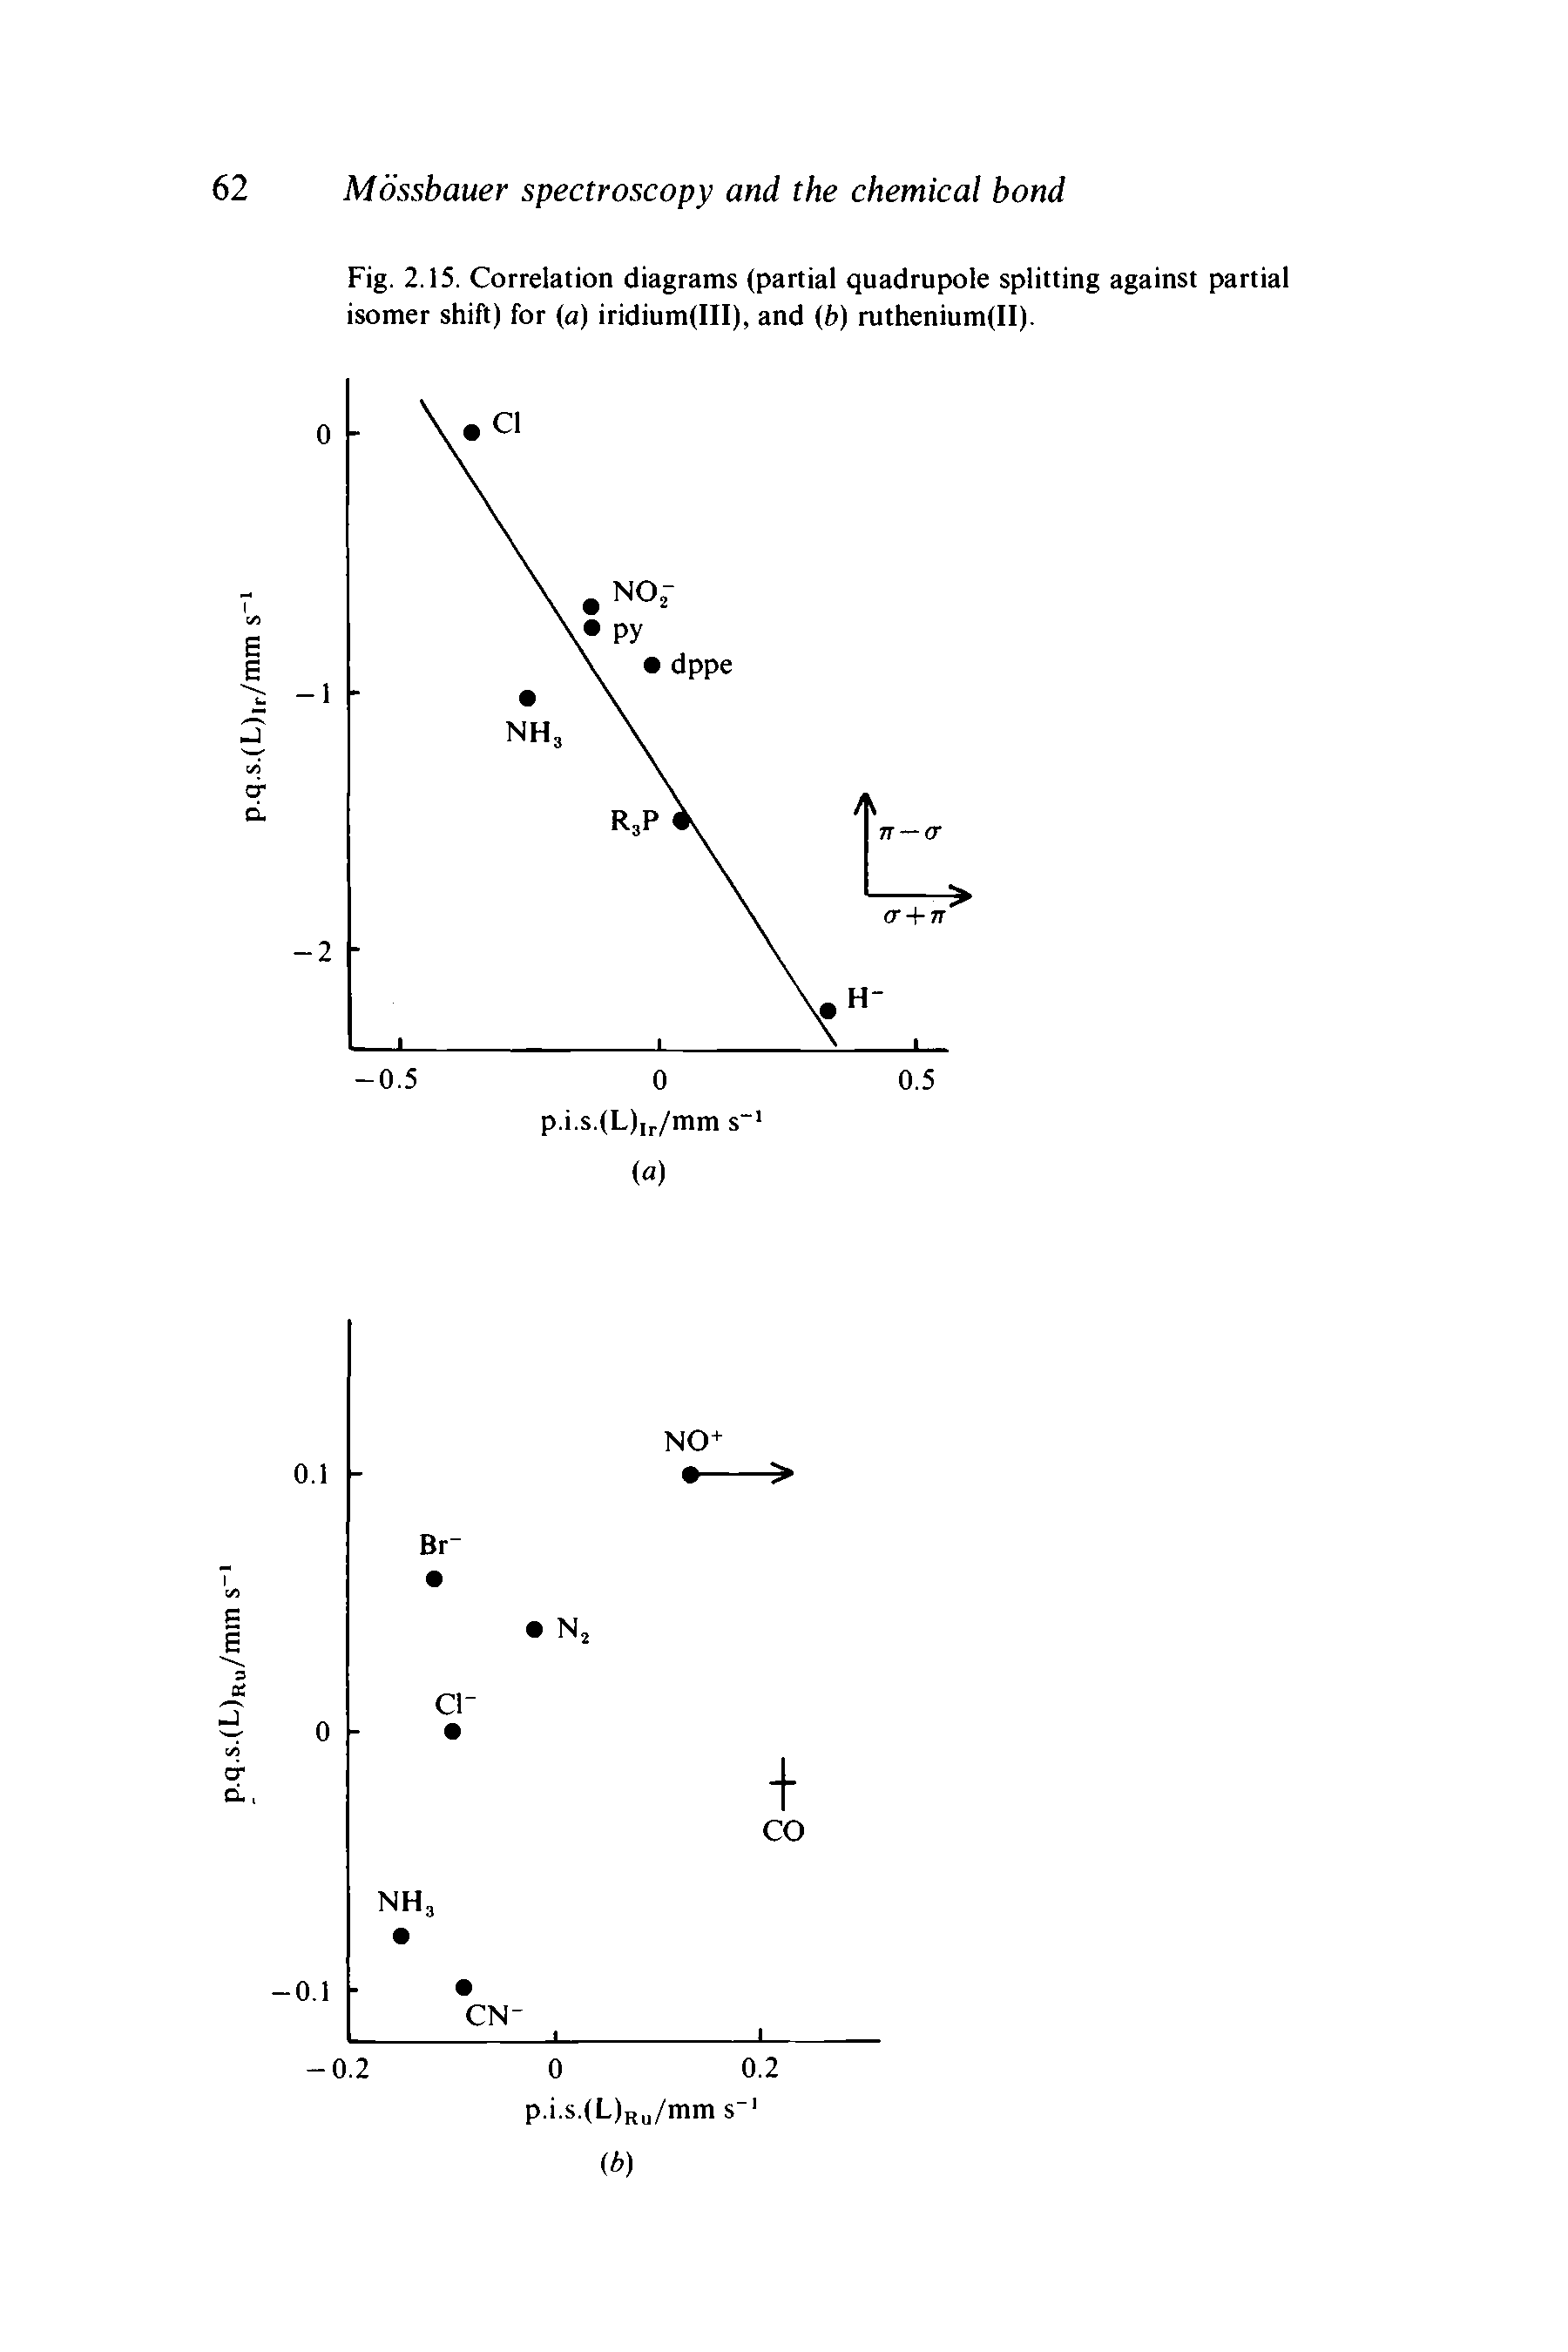 Fig. 2.15. Correlation diagrams (partial quadrupole splitting against partial isomer shift) for (a) iridium(III), and (b) ruthenium(II).